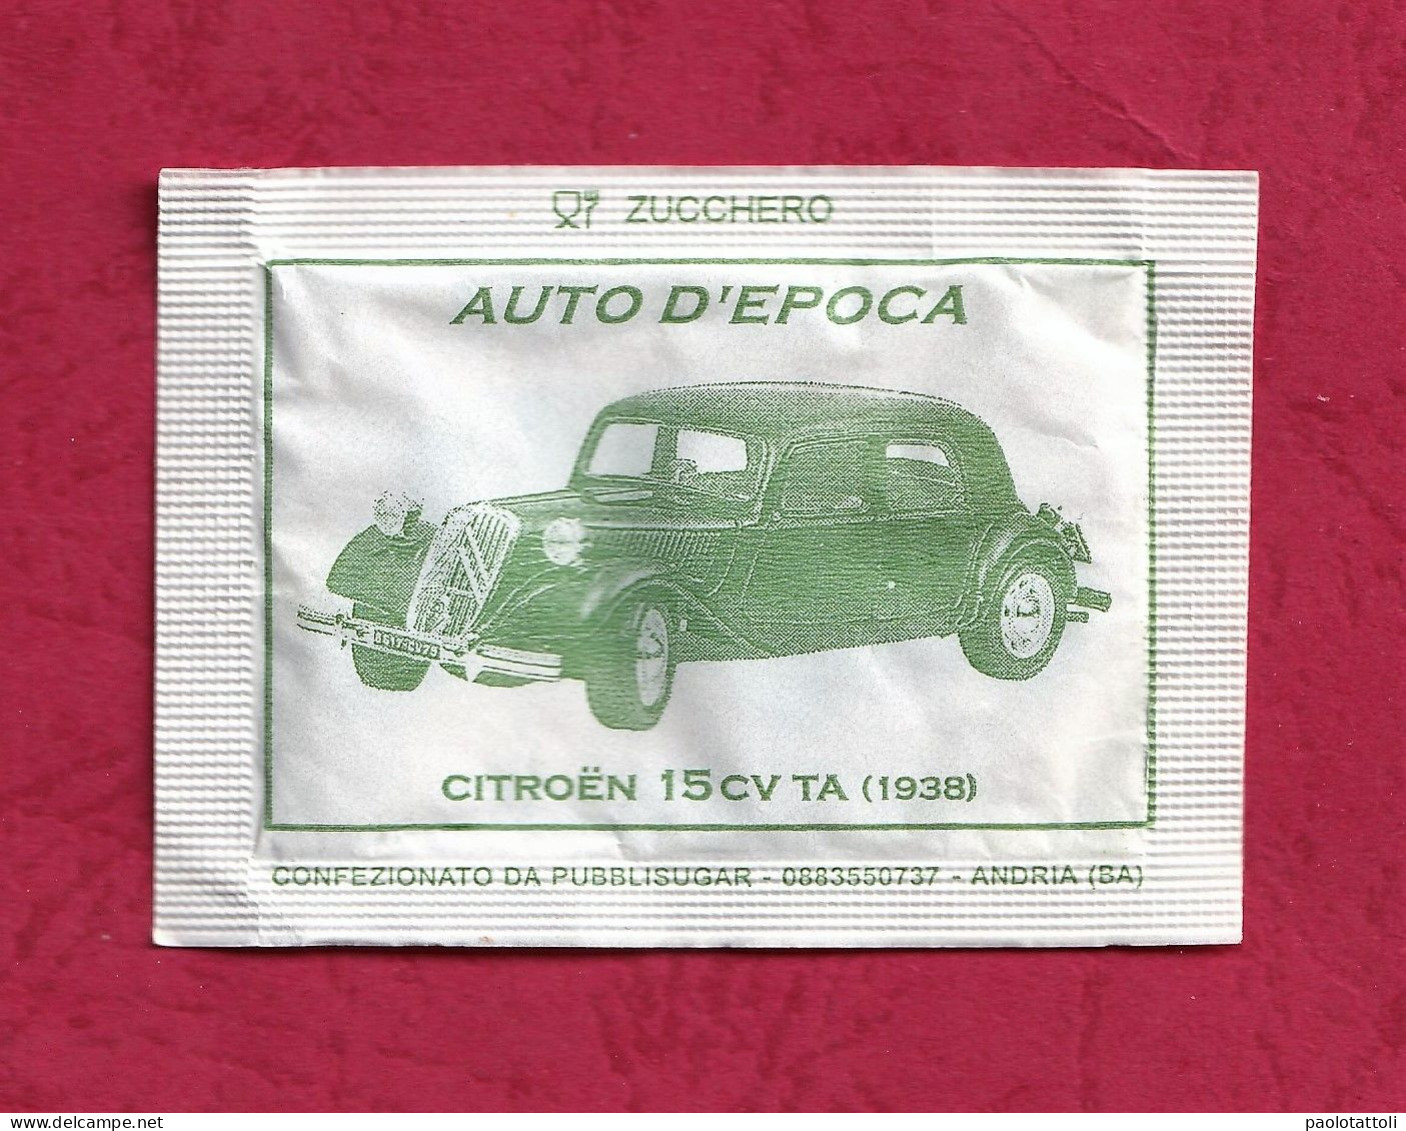 Bustina Vuota Zucchero. Empty Sugar Bag- Cars. Auto D'epoca, Citroen 15 Cv TA-1938. Packed By Pubblisugar, Andria. BA. - Zucker